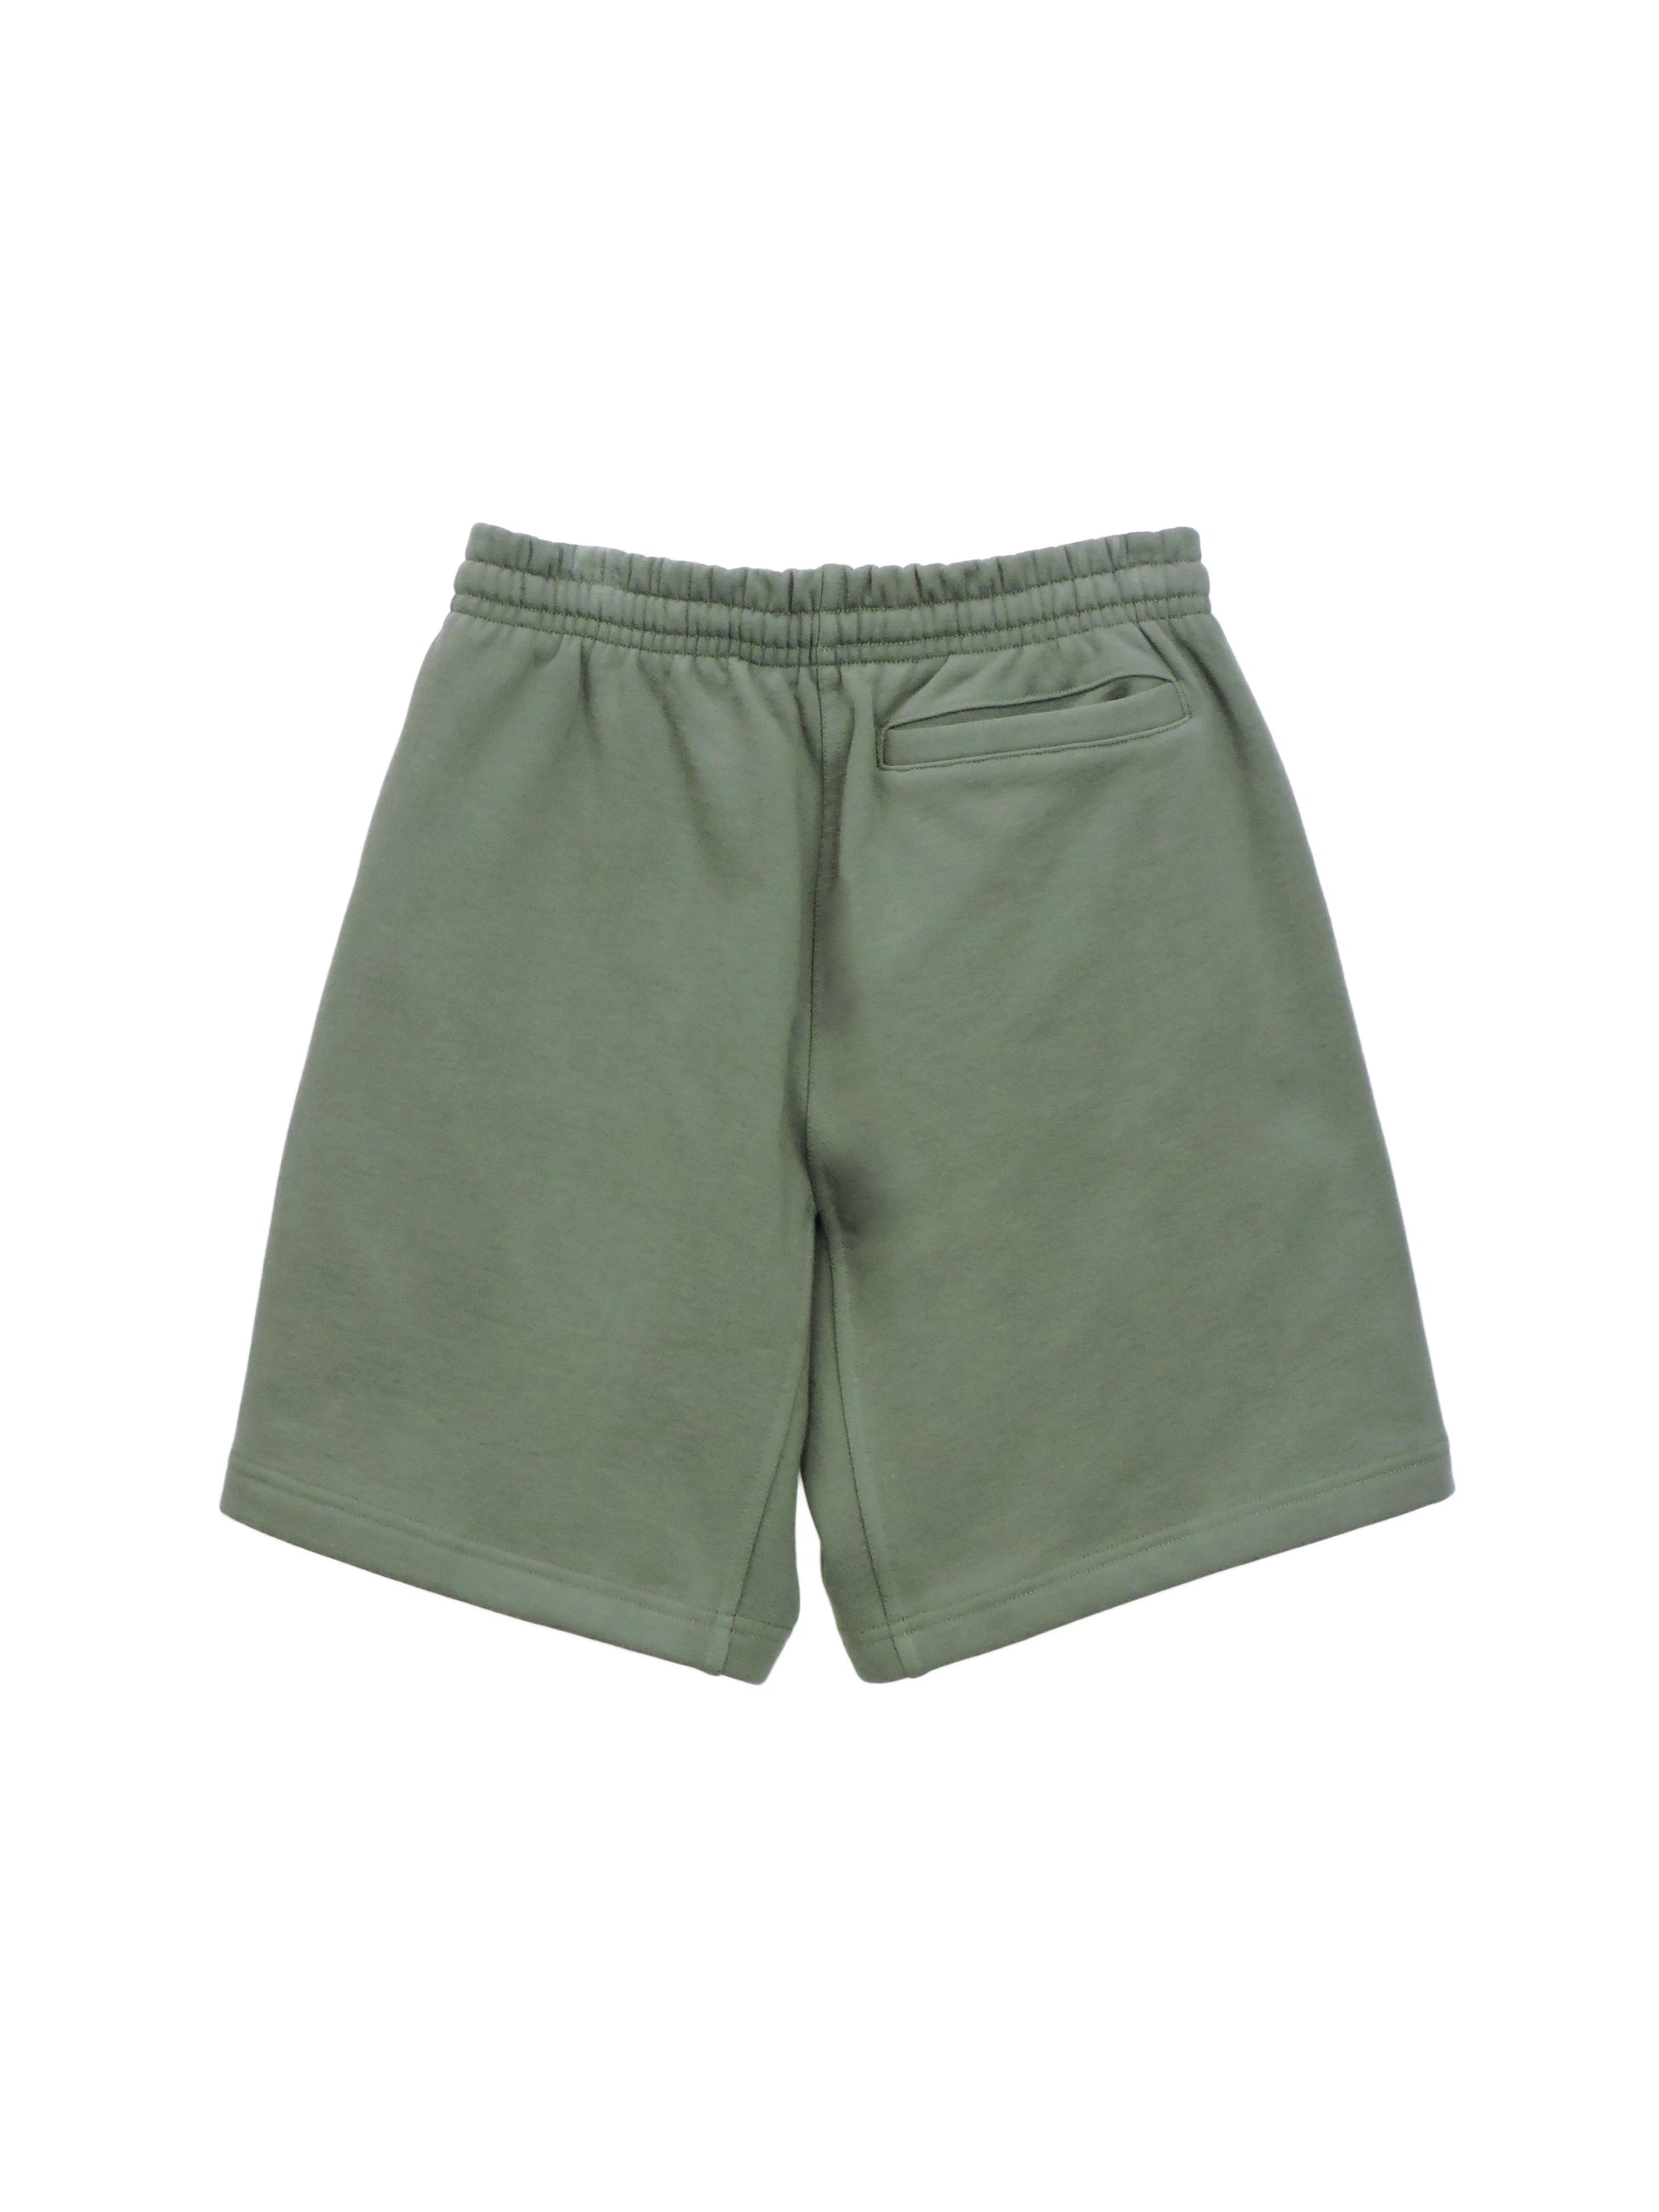 Premium Fleece Shorts - Olive Green M